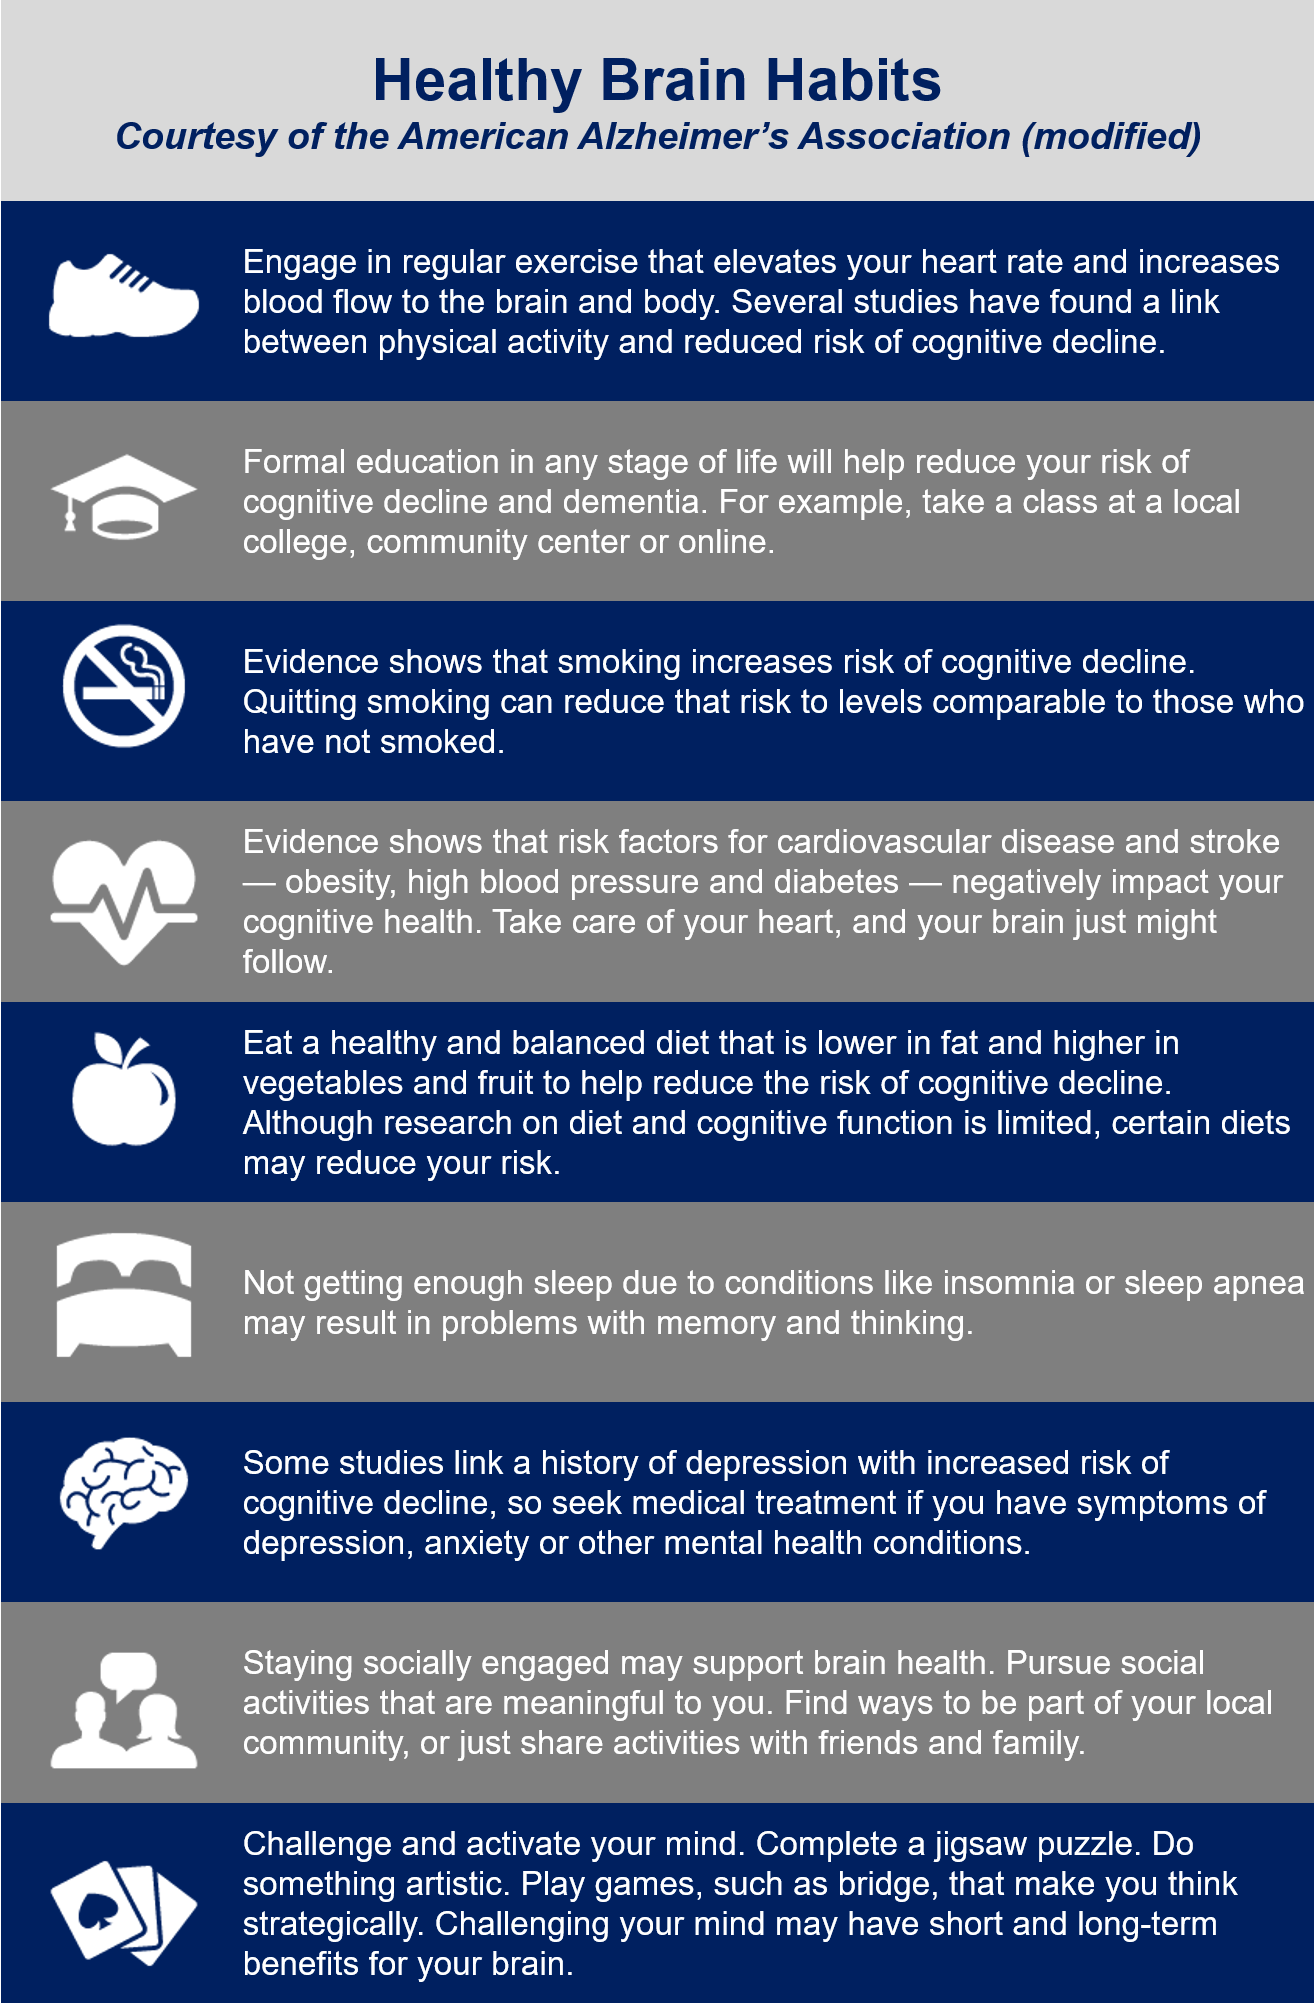 Healthy Brain Habits, courtesy of the American Alzheimer's Association